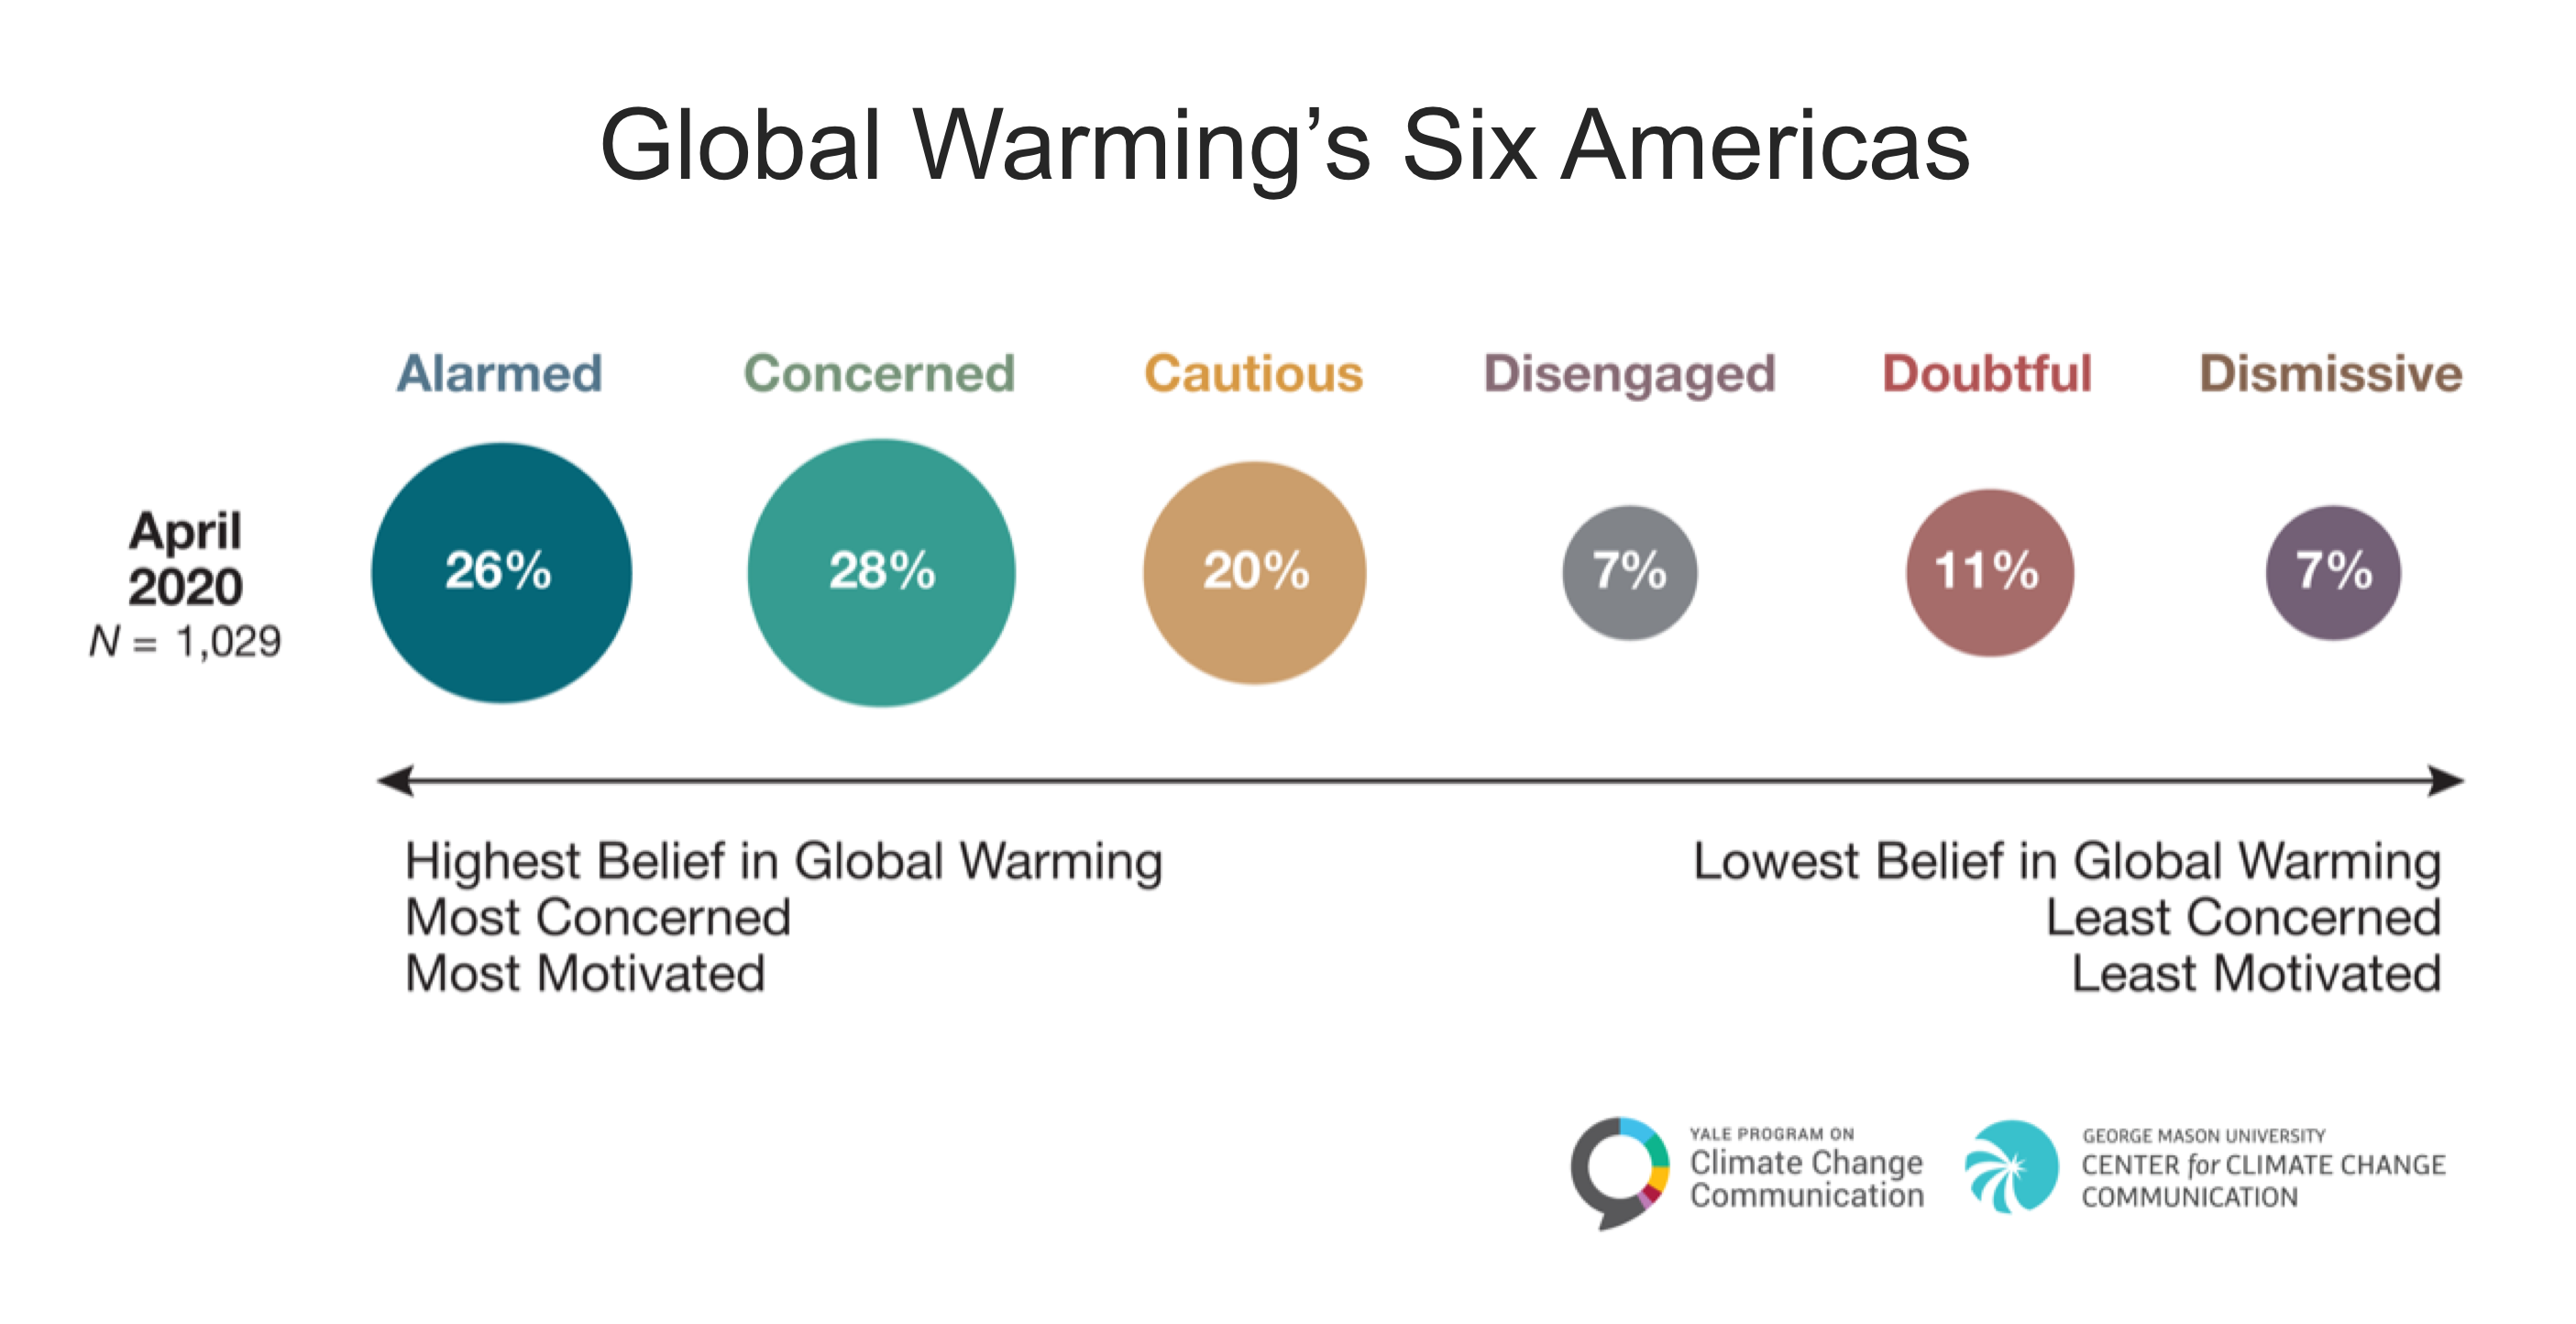 Global Warming’s Six Americas in 2020